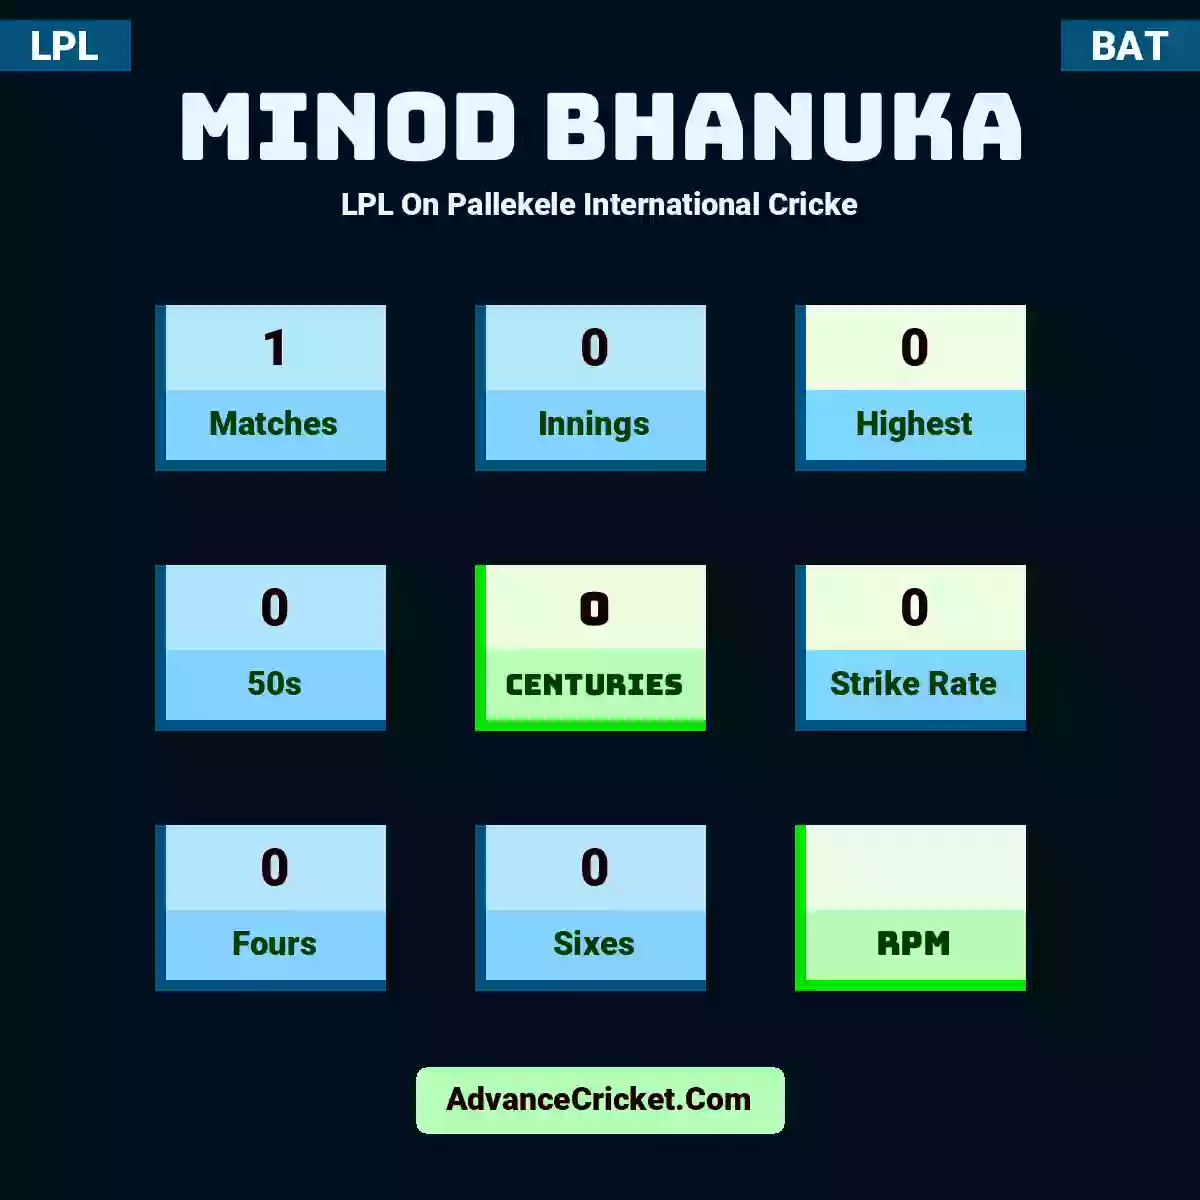 Minod Bhanuka LPL  On Pallekele International Cricke, Minod Bhanuka played 1 matches, scored 0 runs as highest, 0 half-centuries, and 0 centuries, with a strike rate of 0. M.Bhanuka hit 0 fours and 0 sixes.